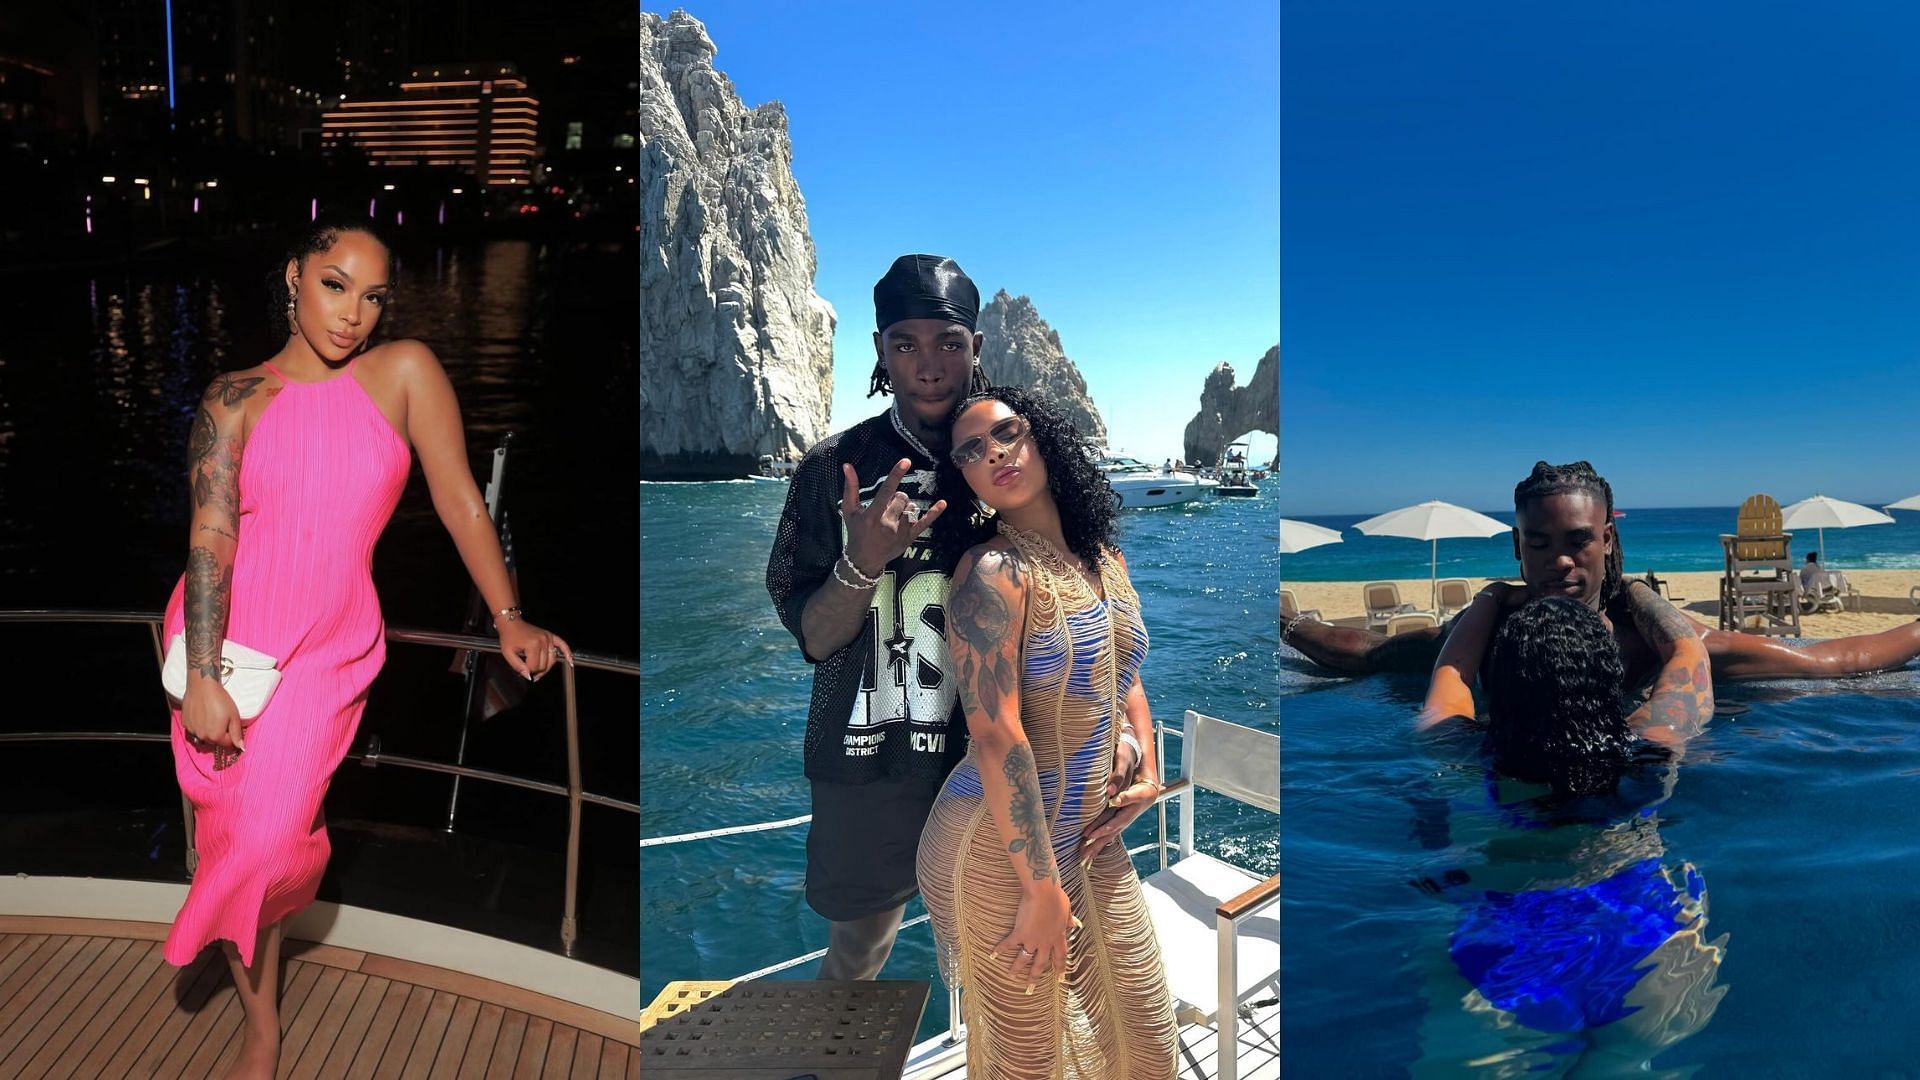 Rashee Rice and his girlfriend Dacoda Nicole Jones on vacation